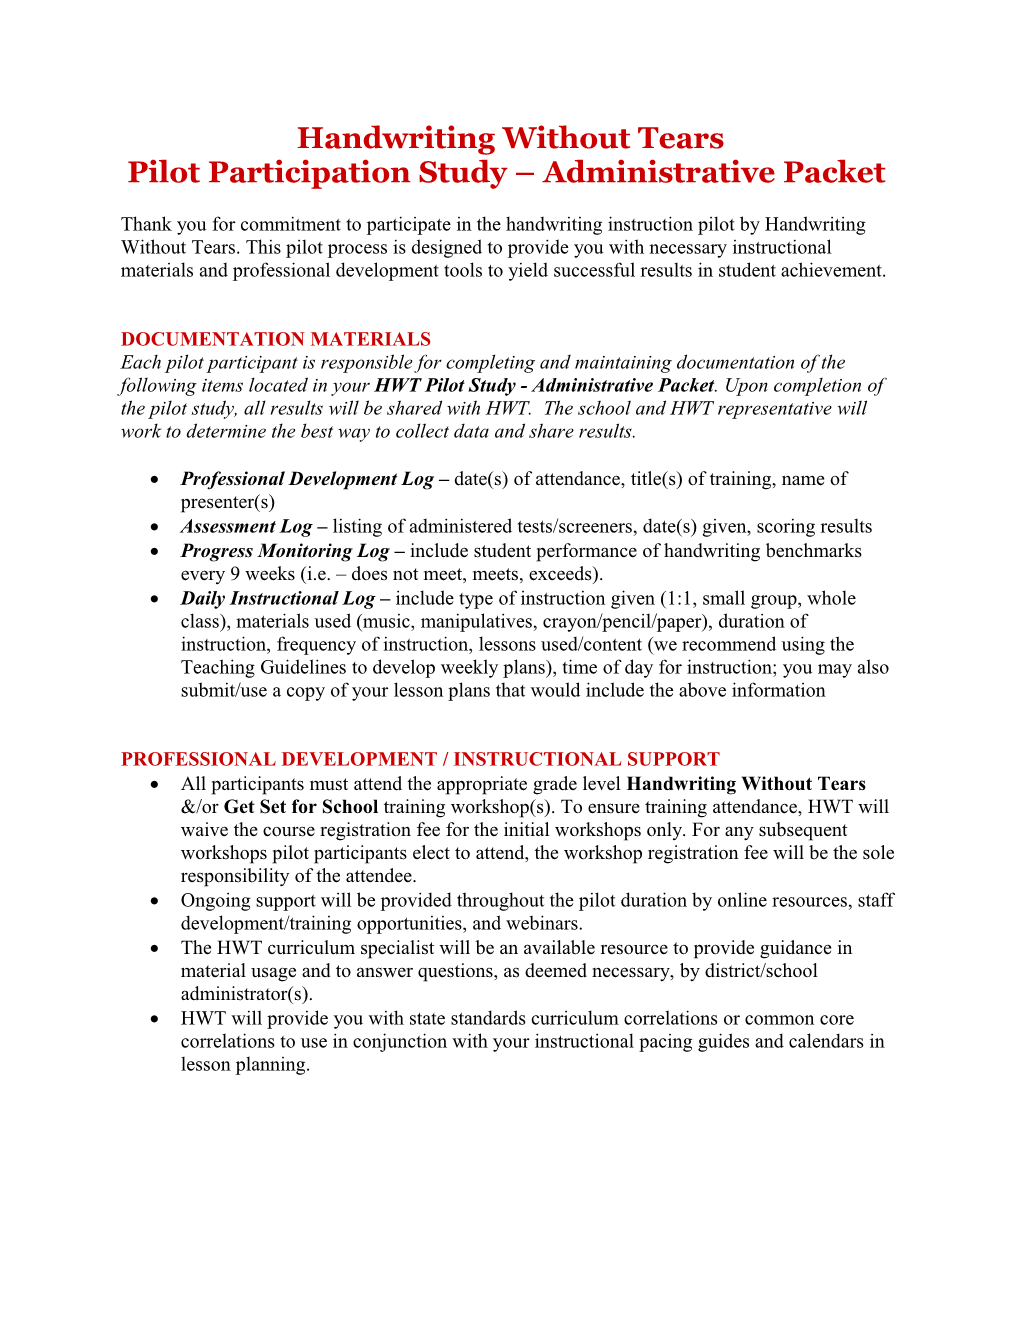 Pilot Participation Study Administrative Packet